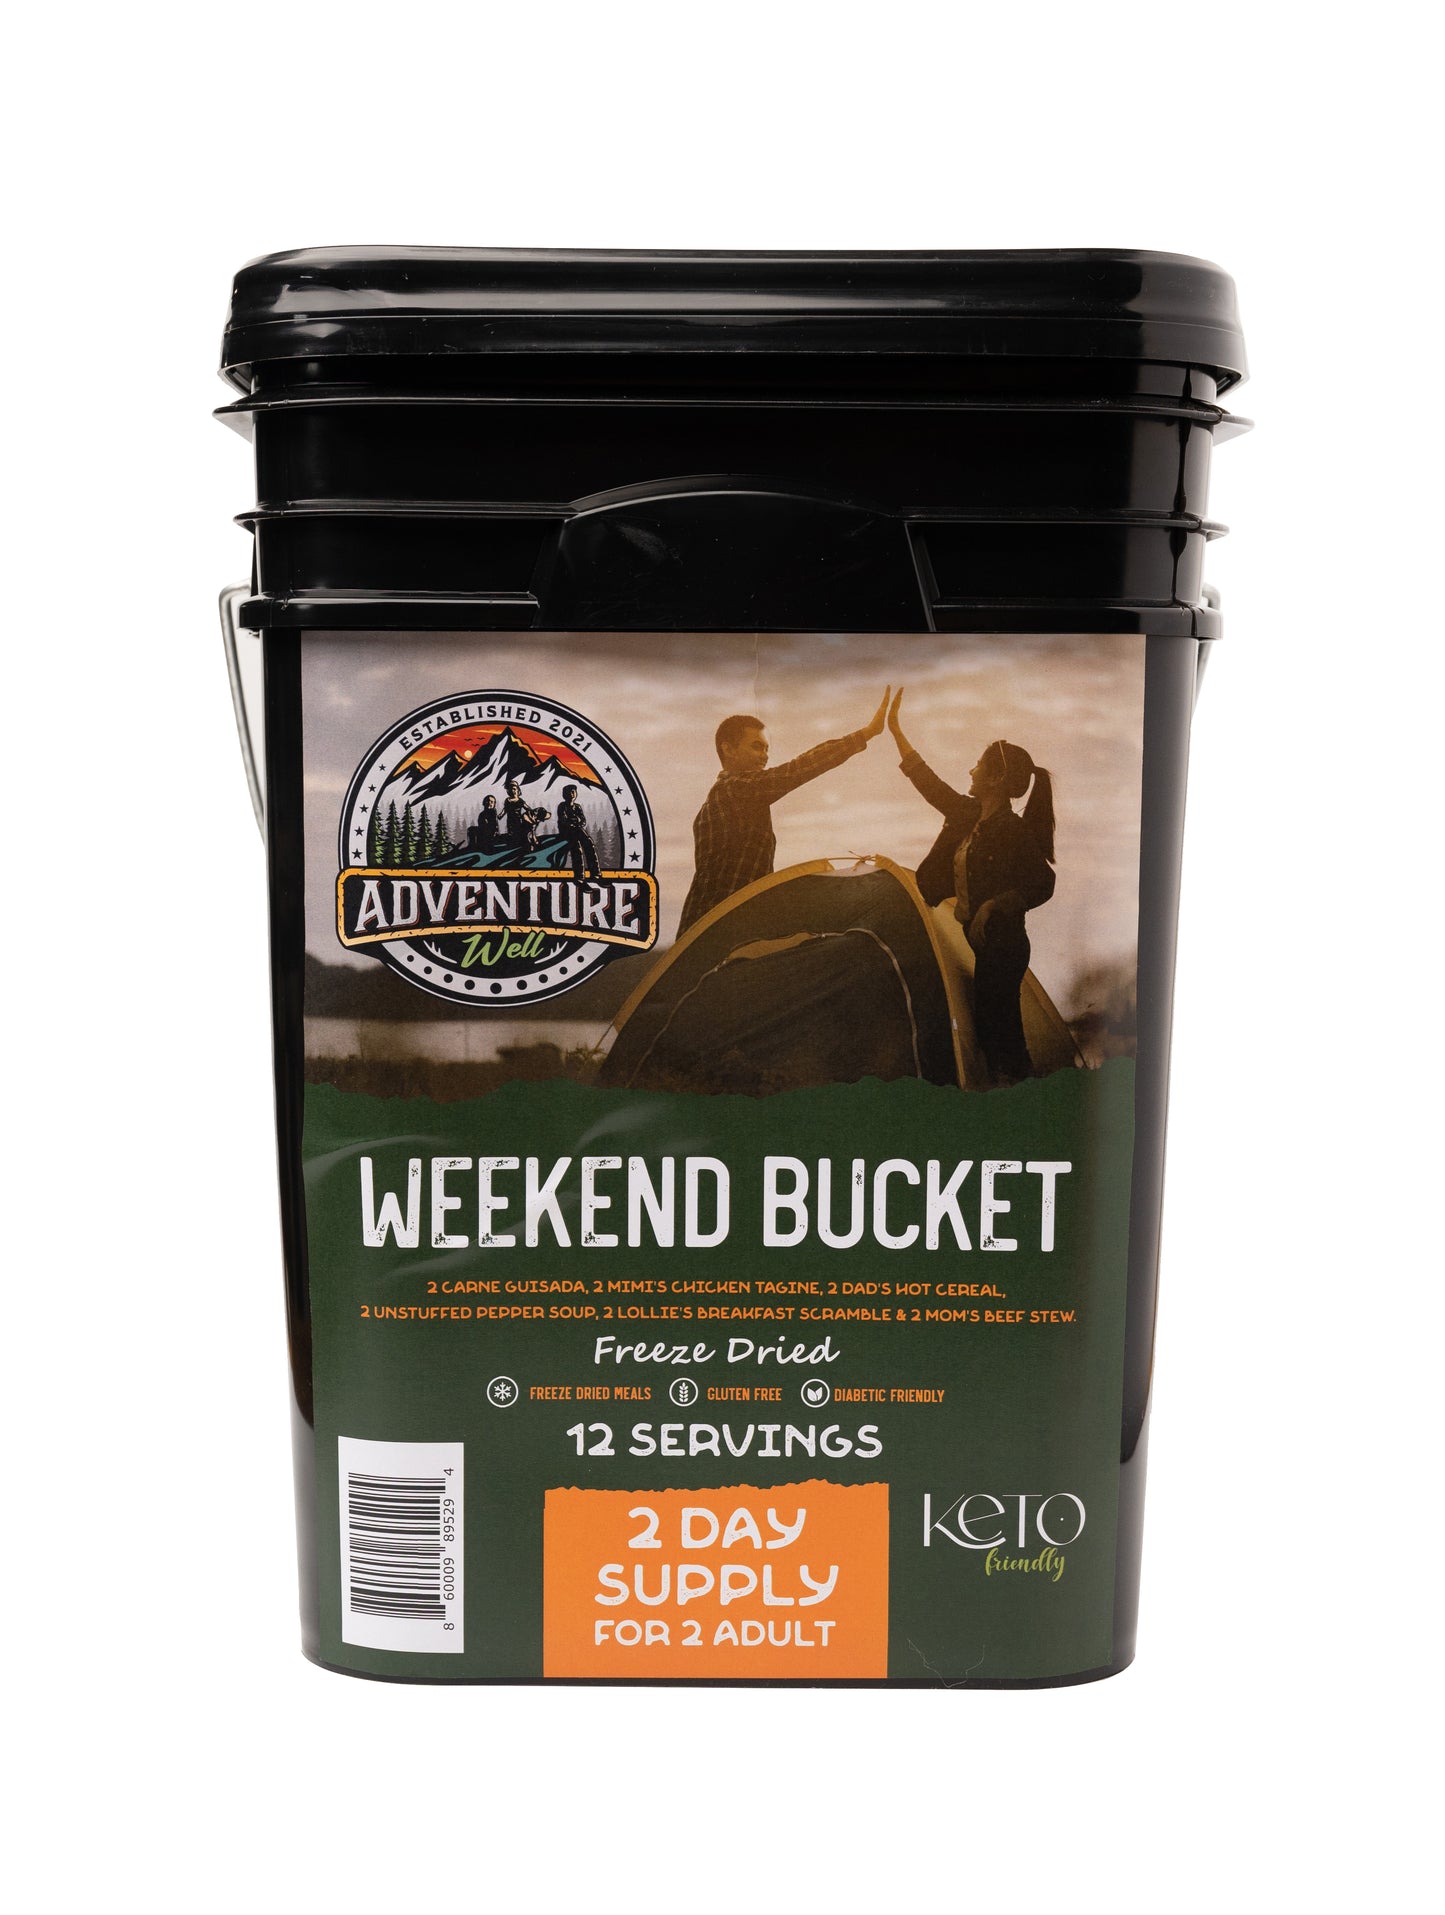 Weekend Bucket - Adventure Well